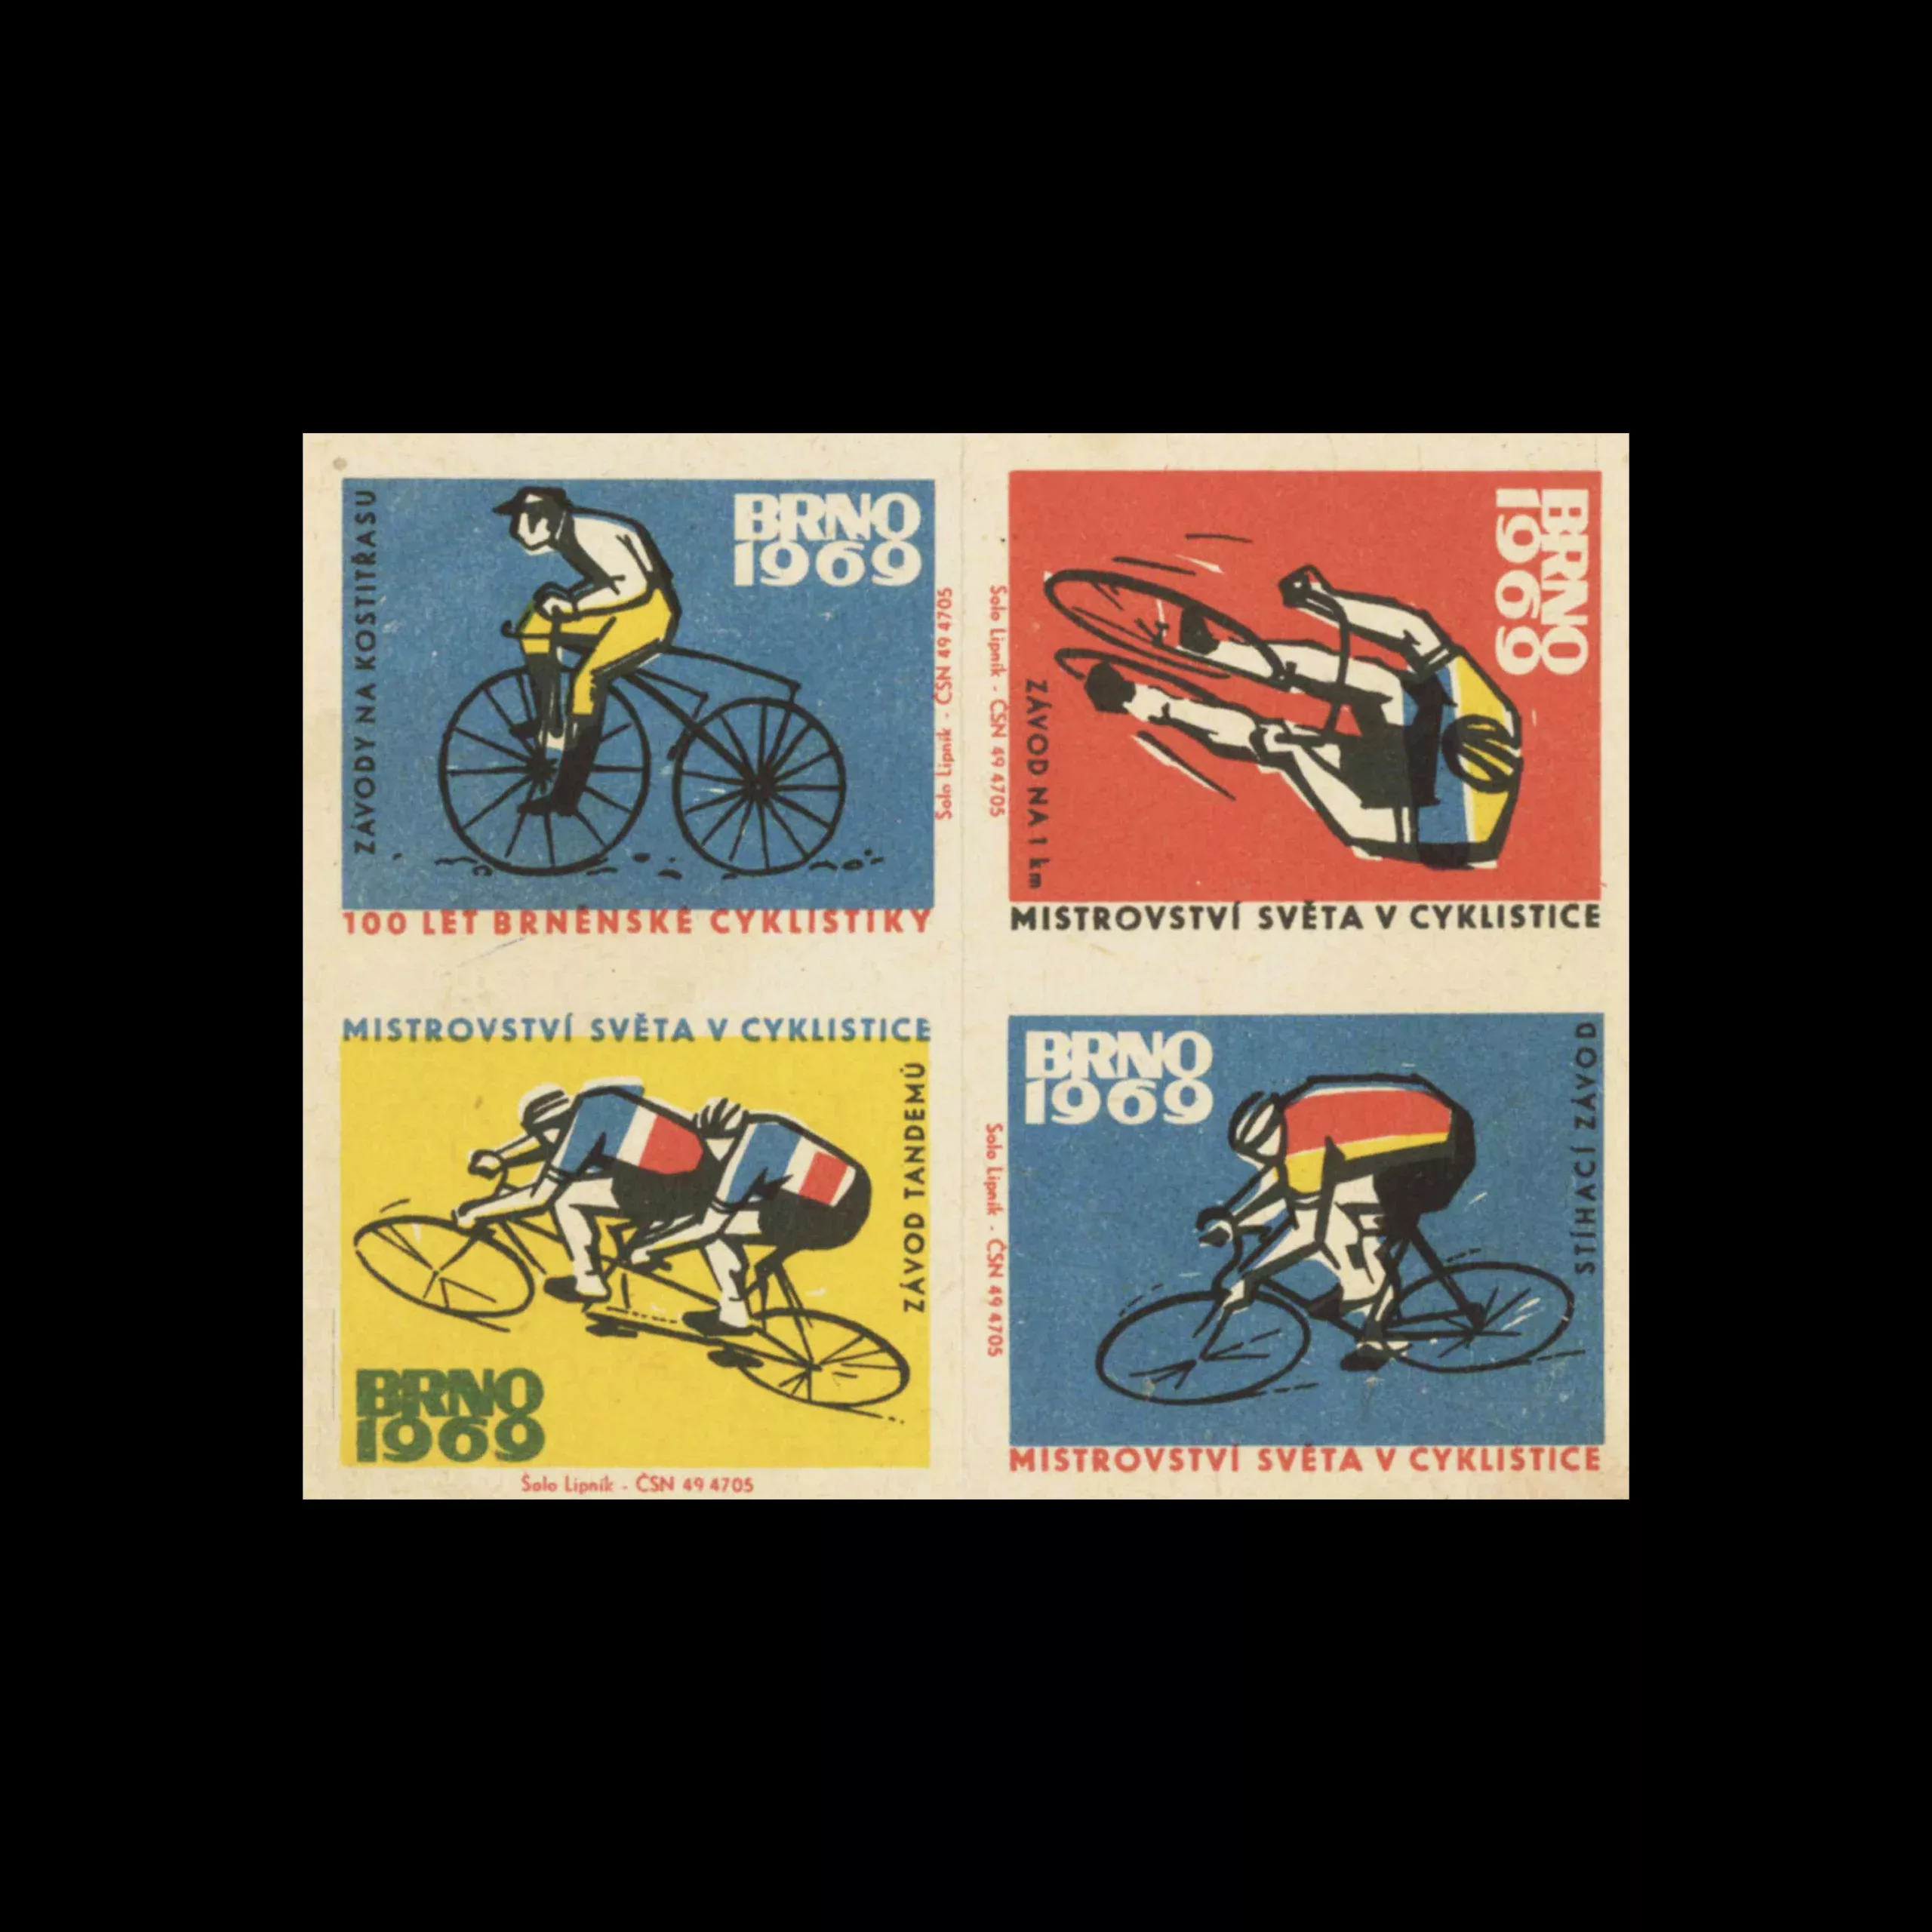 Brno, World Championship for Track cycling, 1969, Czechoslovakia Matchbox Label Set